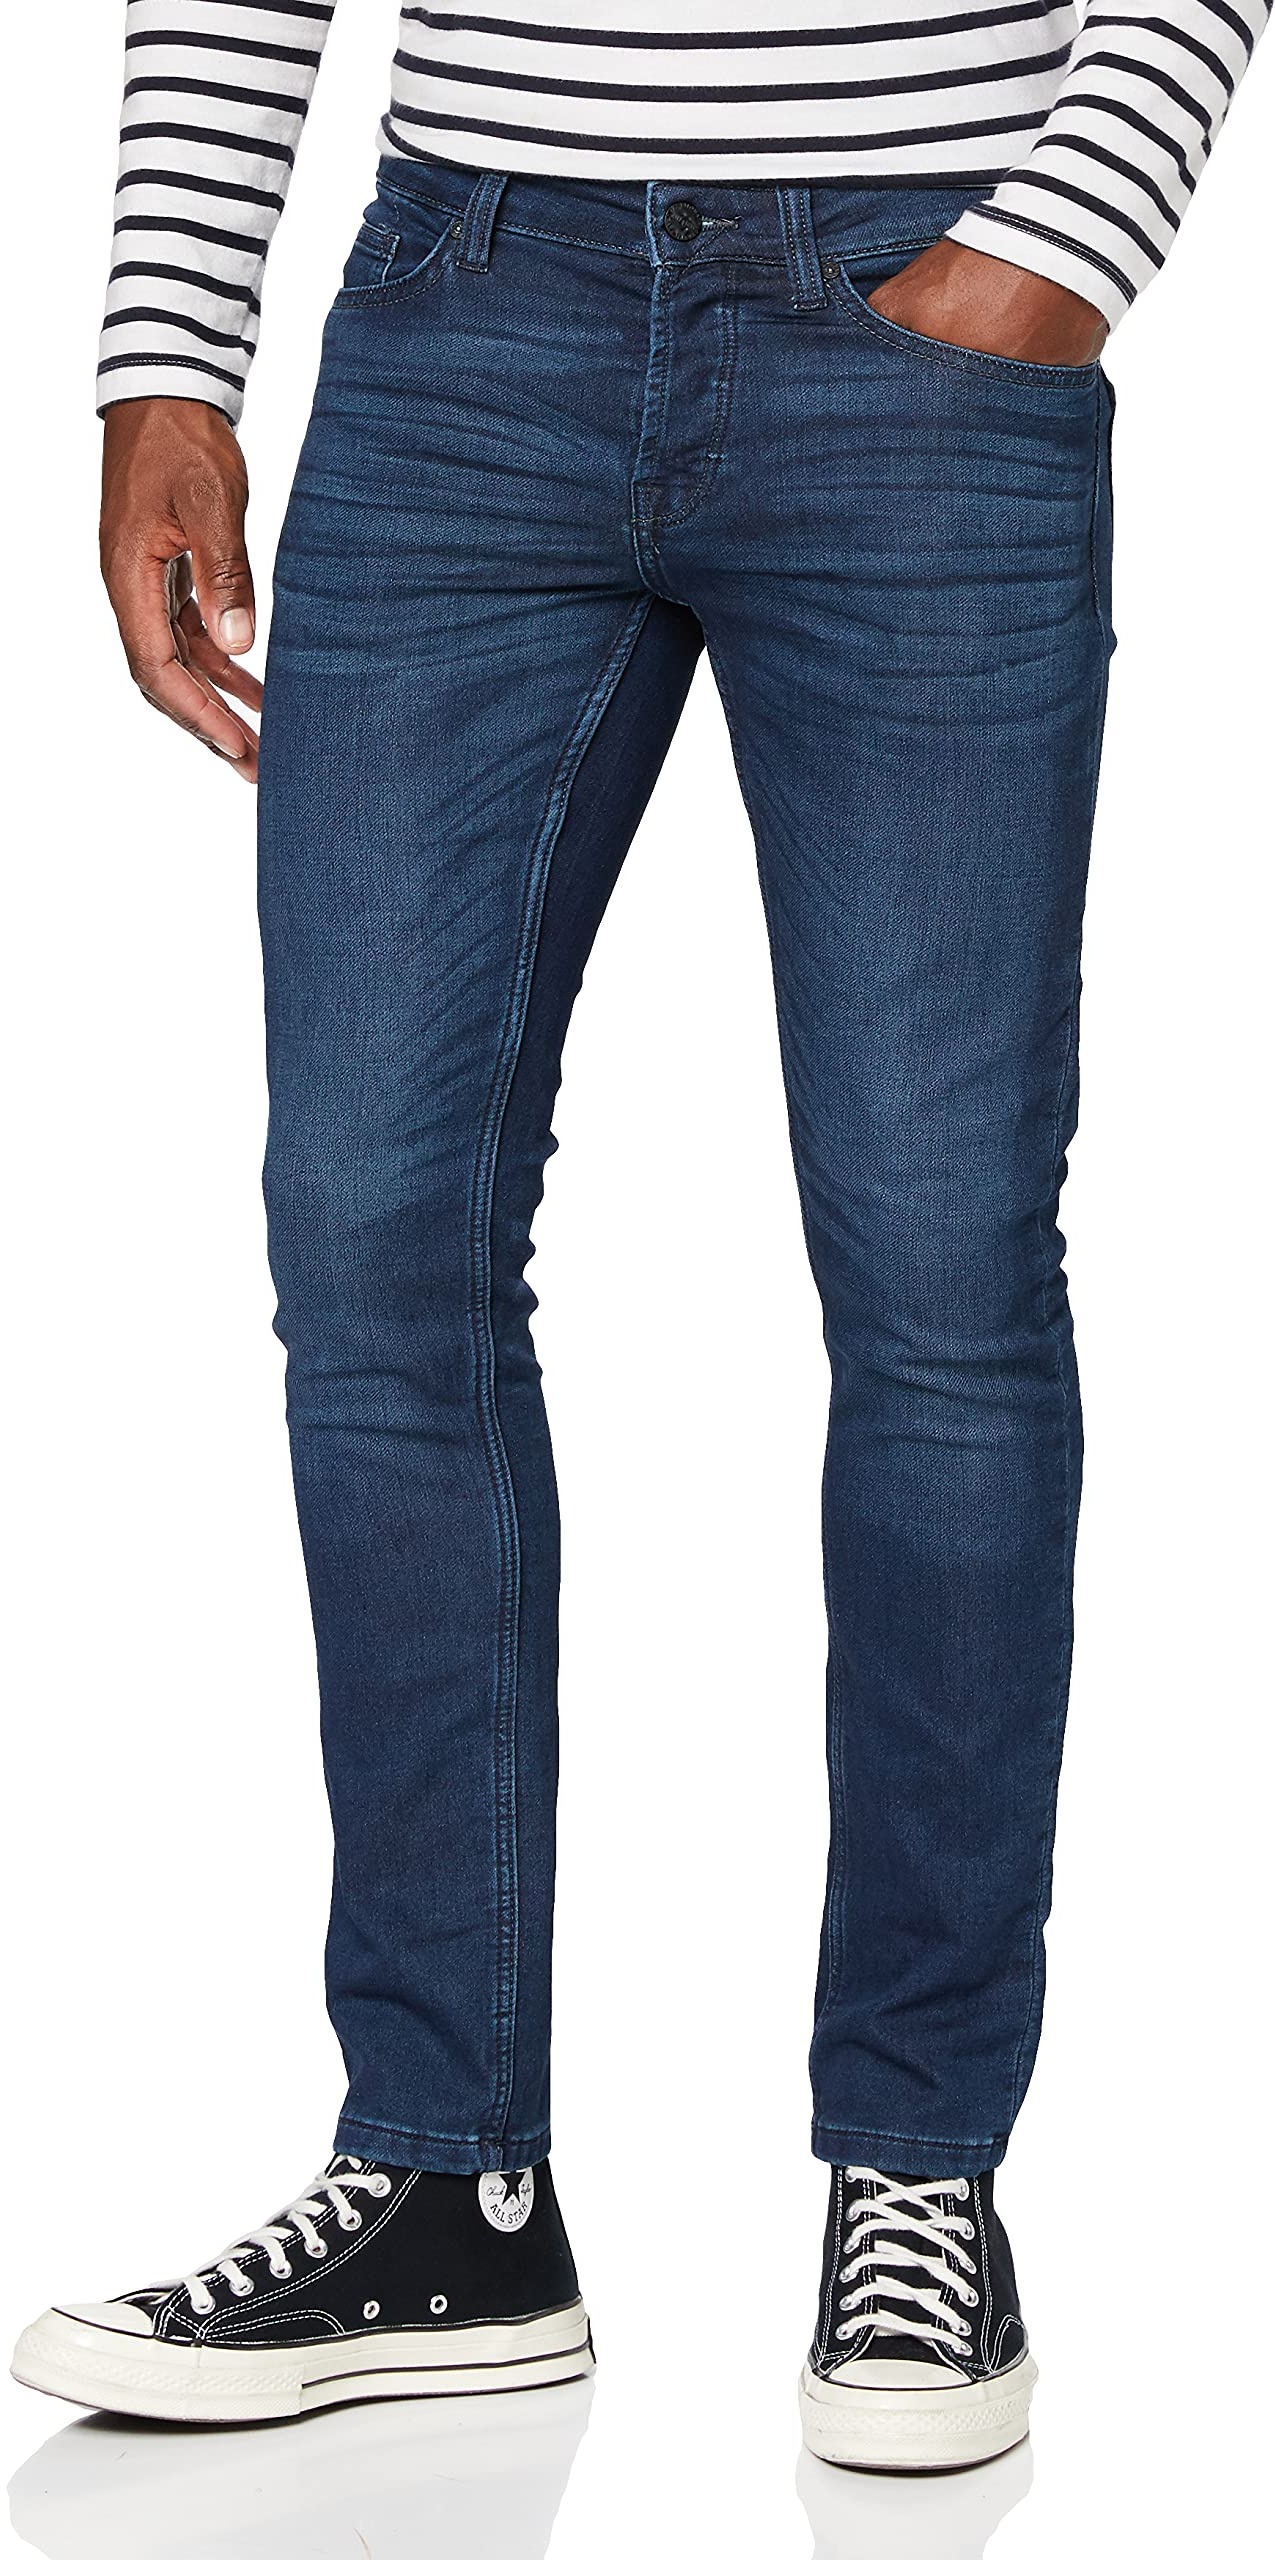 ONLY & SONS Herren Slim Jeans,Blau (Blue Denim Blue Denim),W33/L30